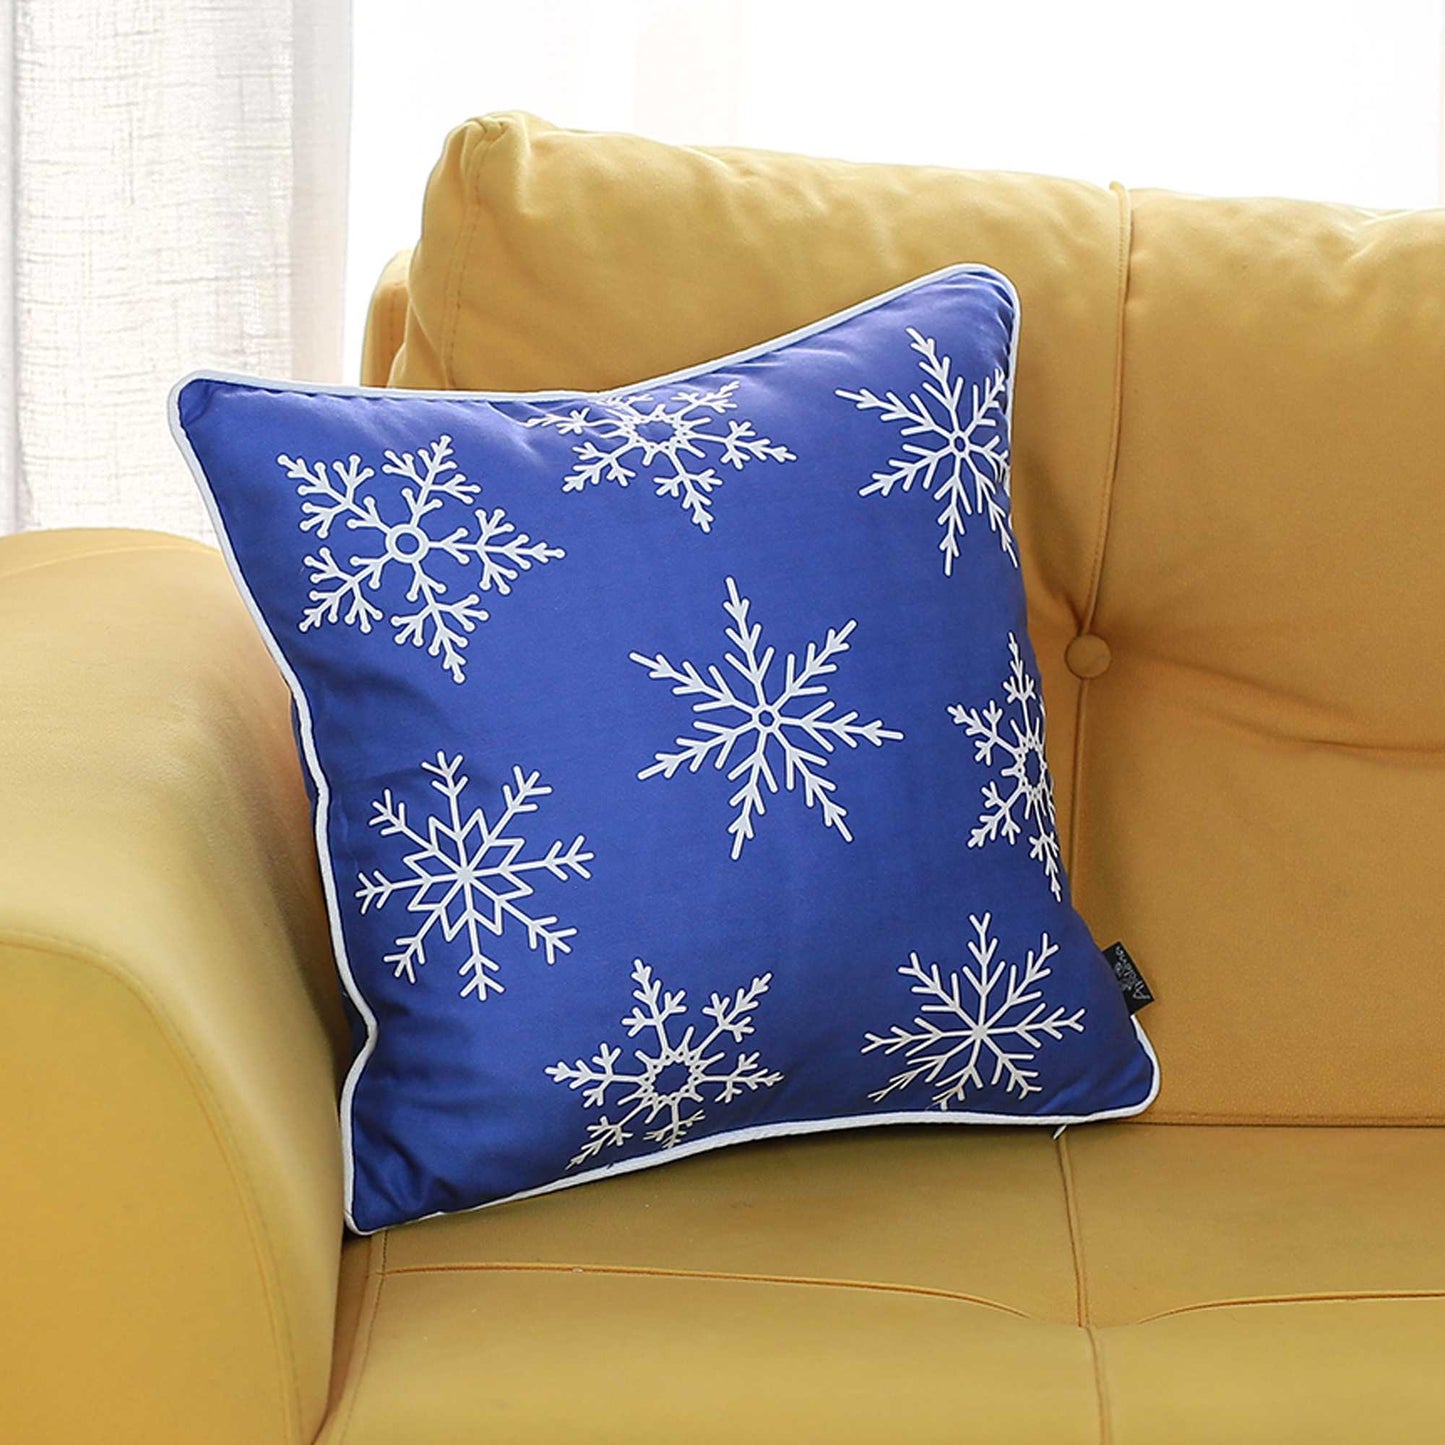 18" Blue Christmas Snow Flakes Throw Pillow Cover